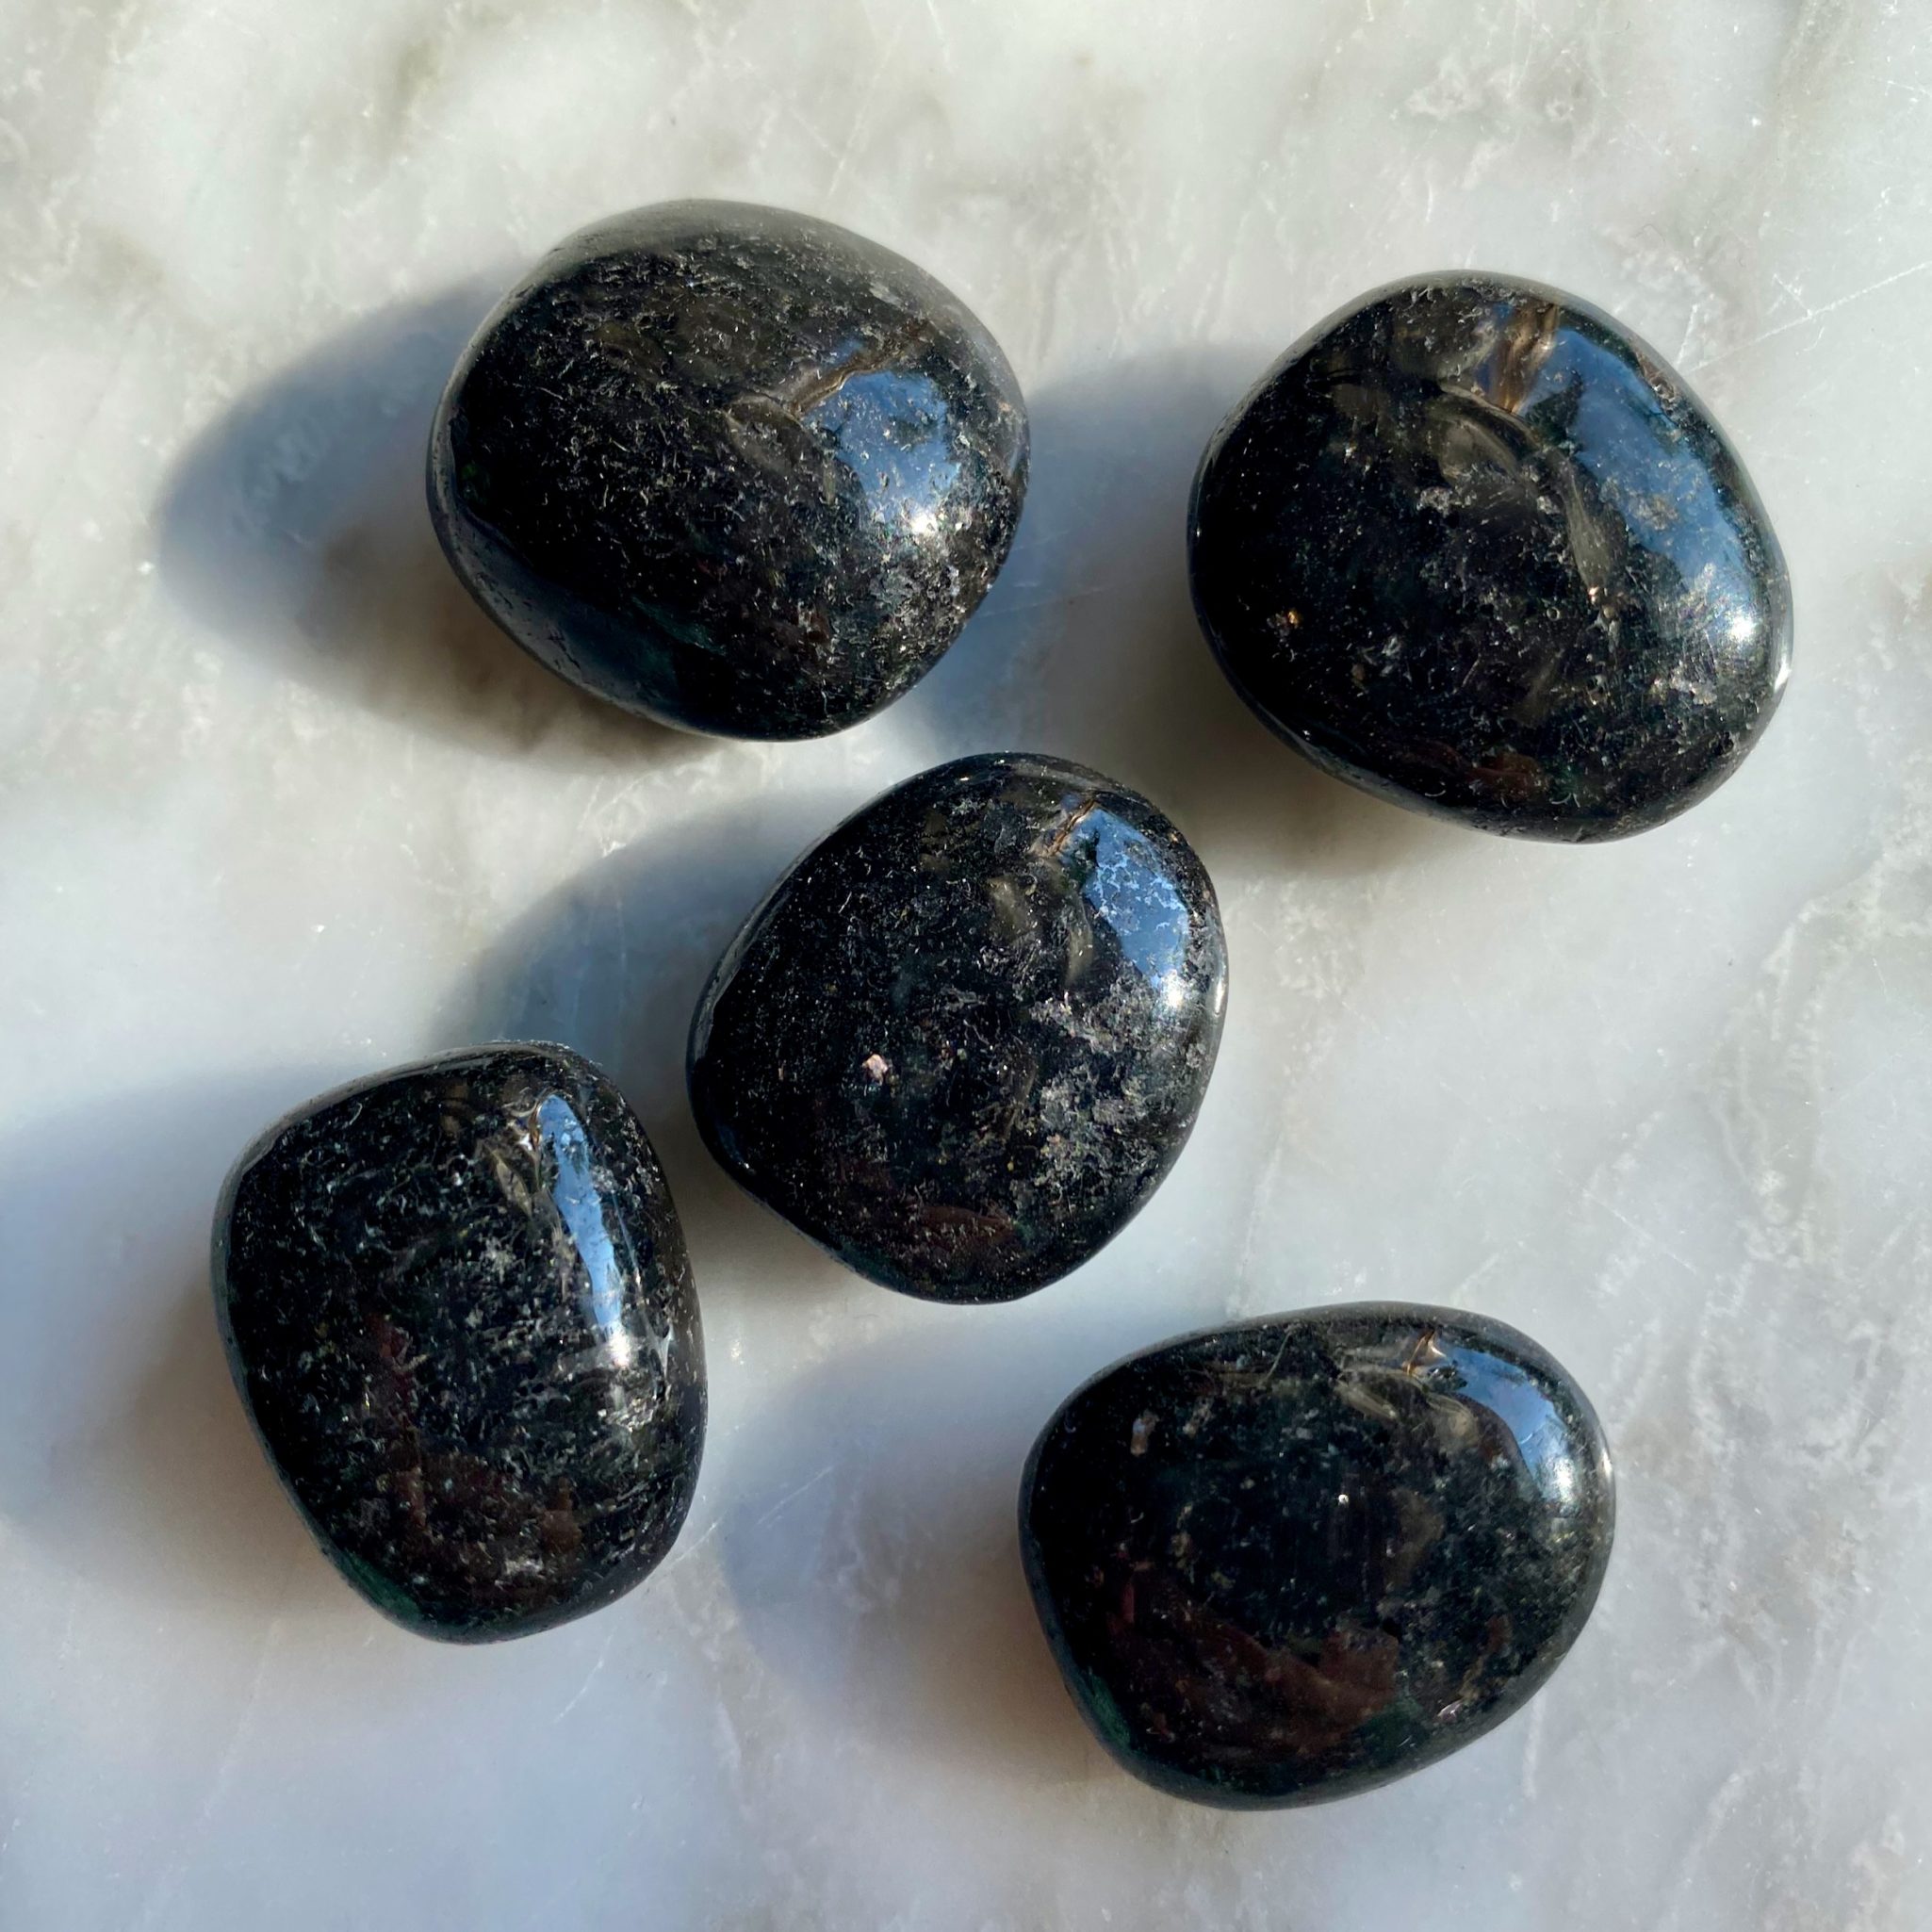 Indian Nuummite Tumbled Pocket Stone - Nuummite indienne roulée pierre de poche